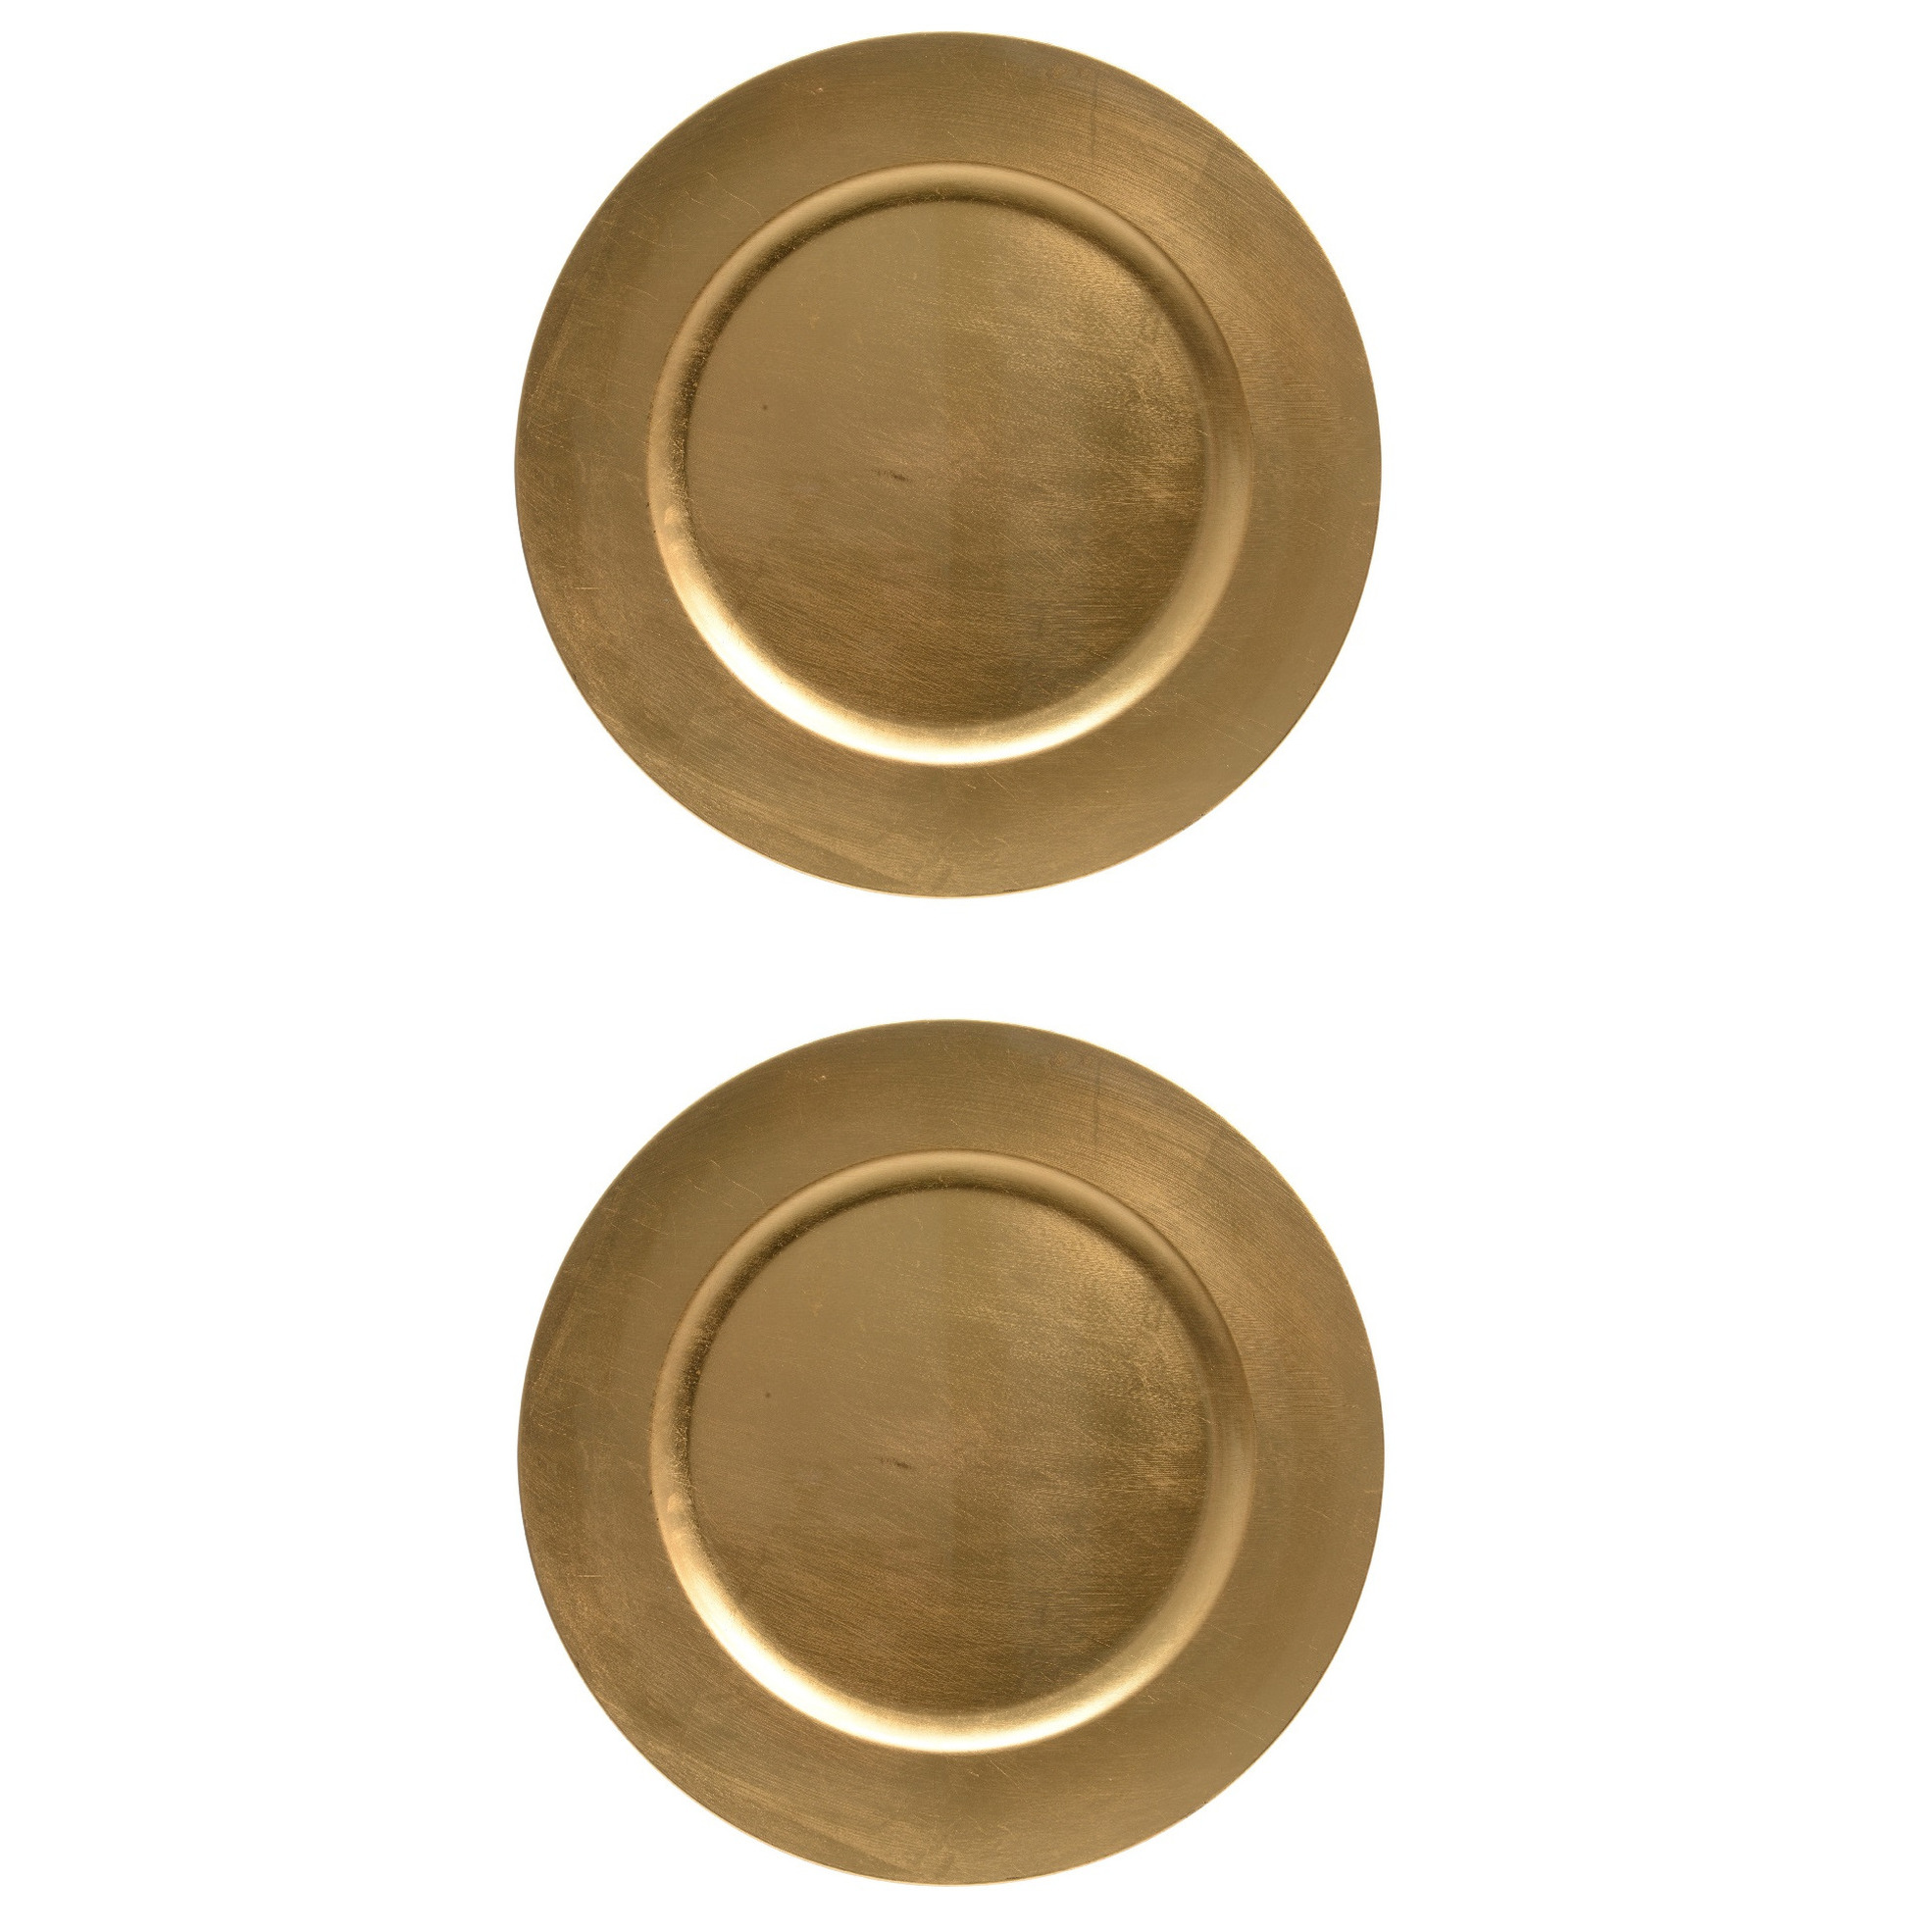 6x stuks diner borden-onderborden goud glimmend 33 cm